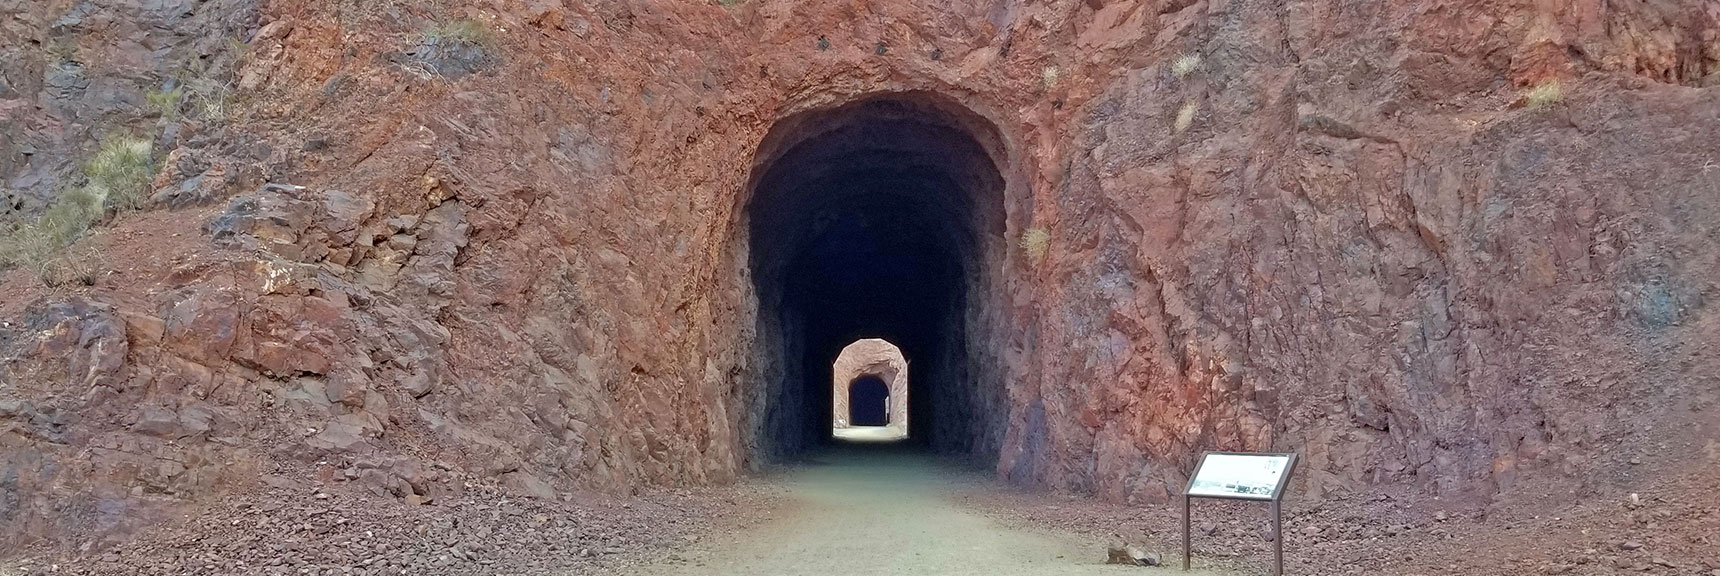 Tunnel #1 and 2 | Historic Railroad Trail | Lake Mead National Recreation Area, Nevada